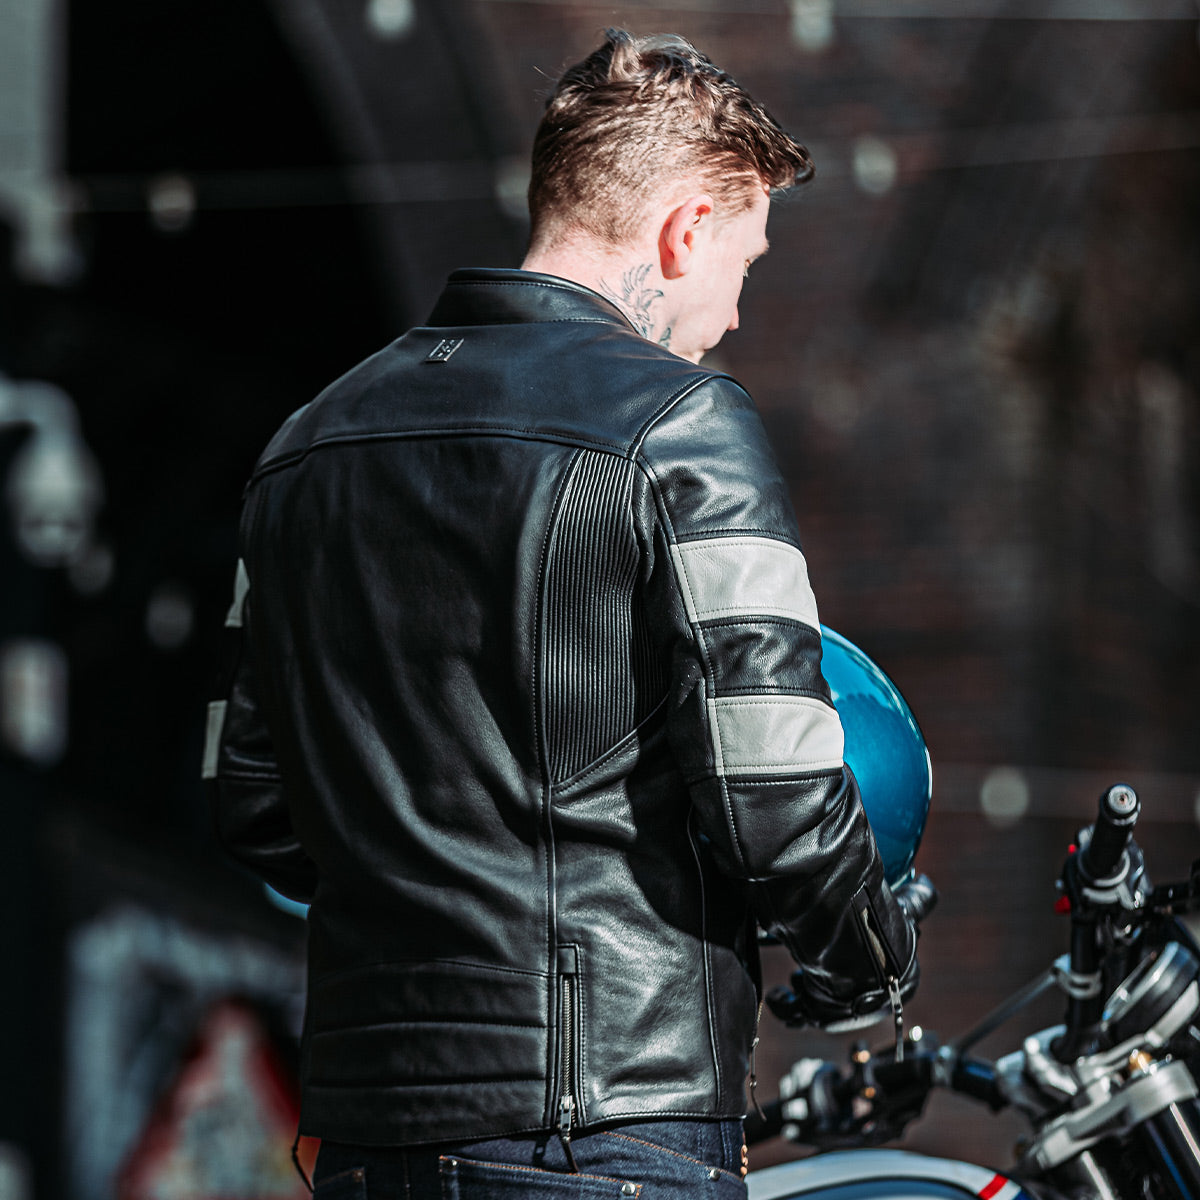 Spada Hanzo Black & Ivory Leather Motorcycle Jacket